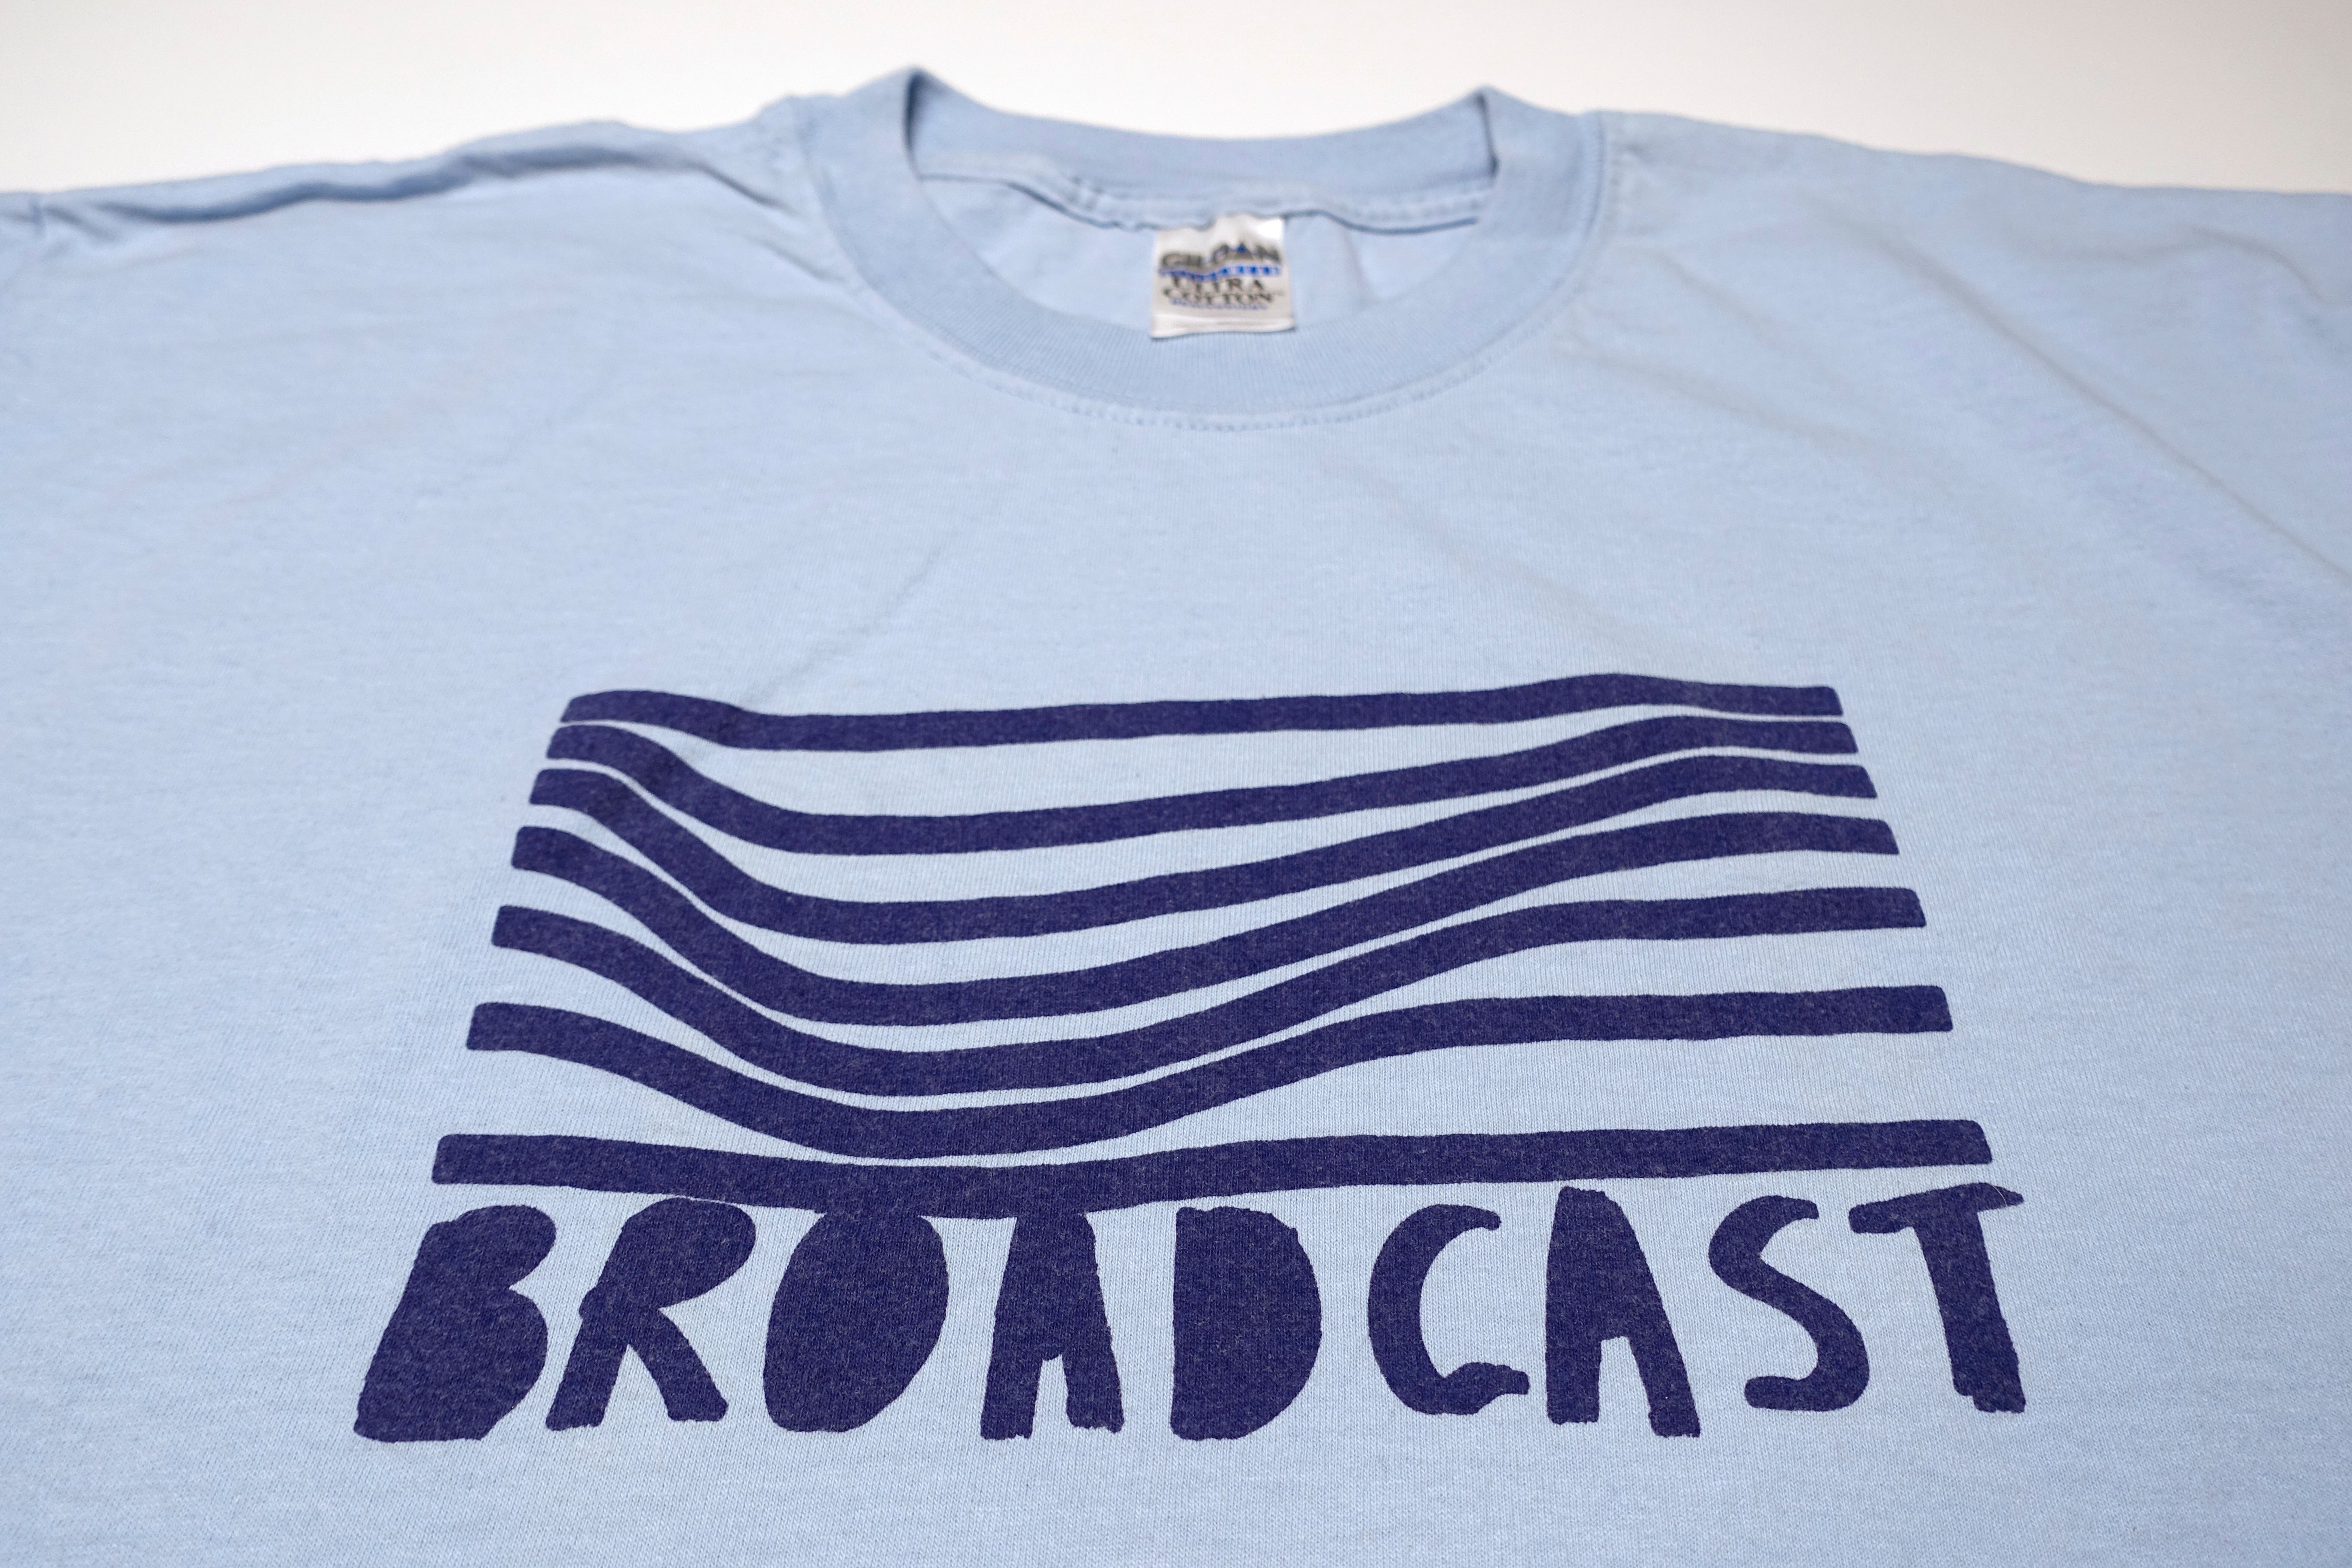 Broadcast - Wavy Lines Tour Shirt Size XL